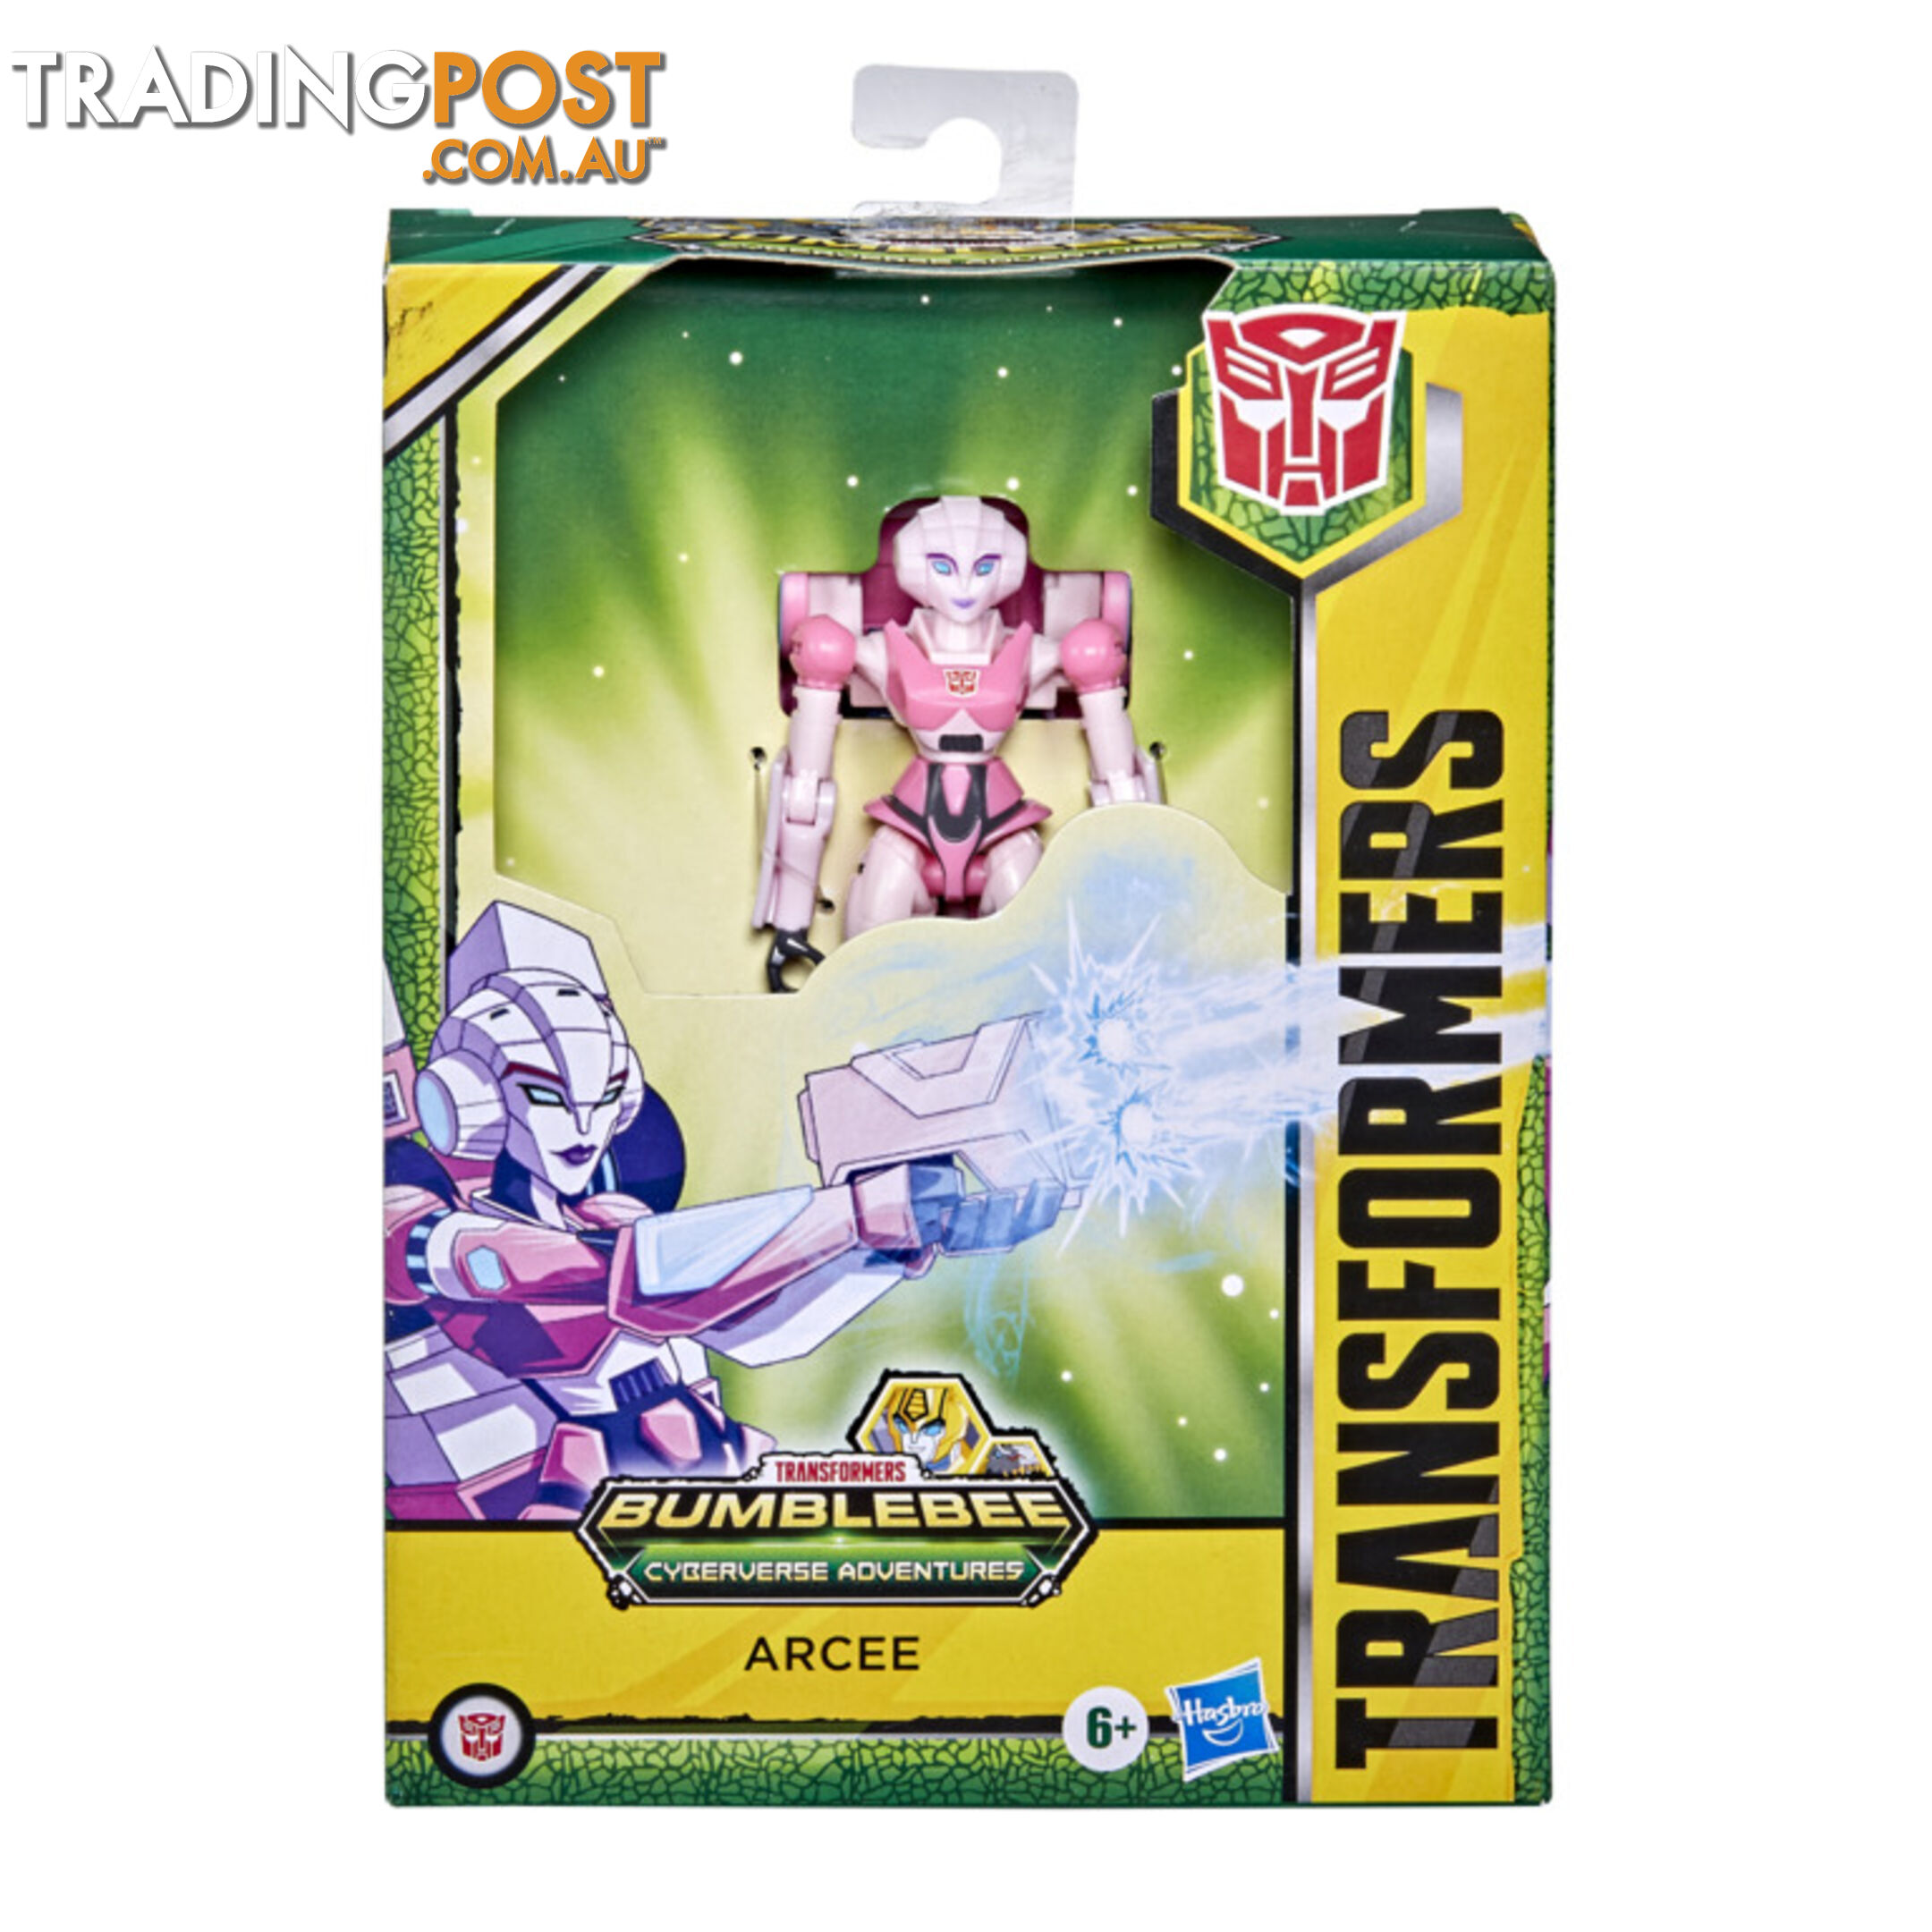 Transformers Bumblebee Cyberverse Adventures Toys Deluxe Arcee - Hbe70535e7104 - 5010993866878